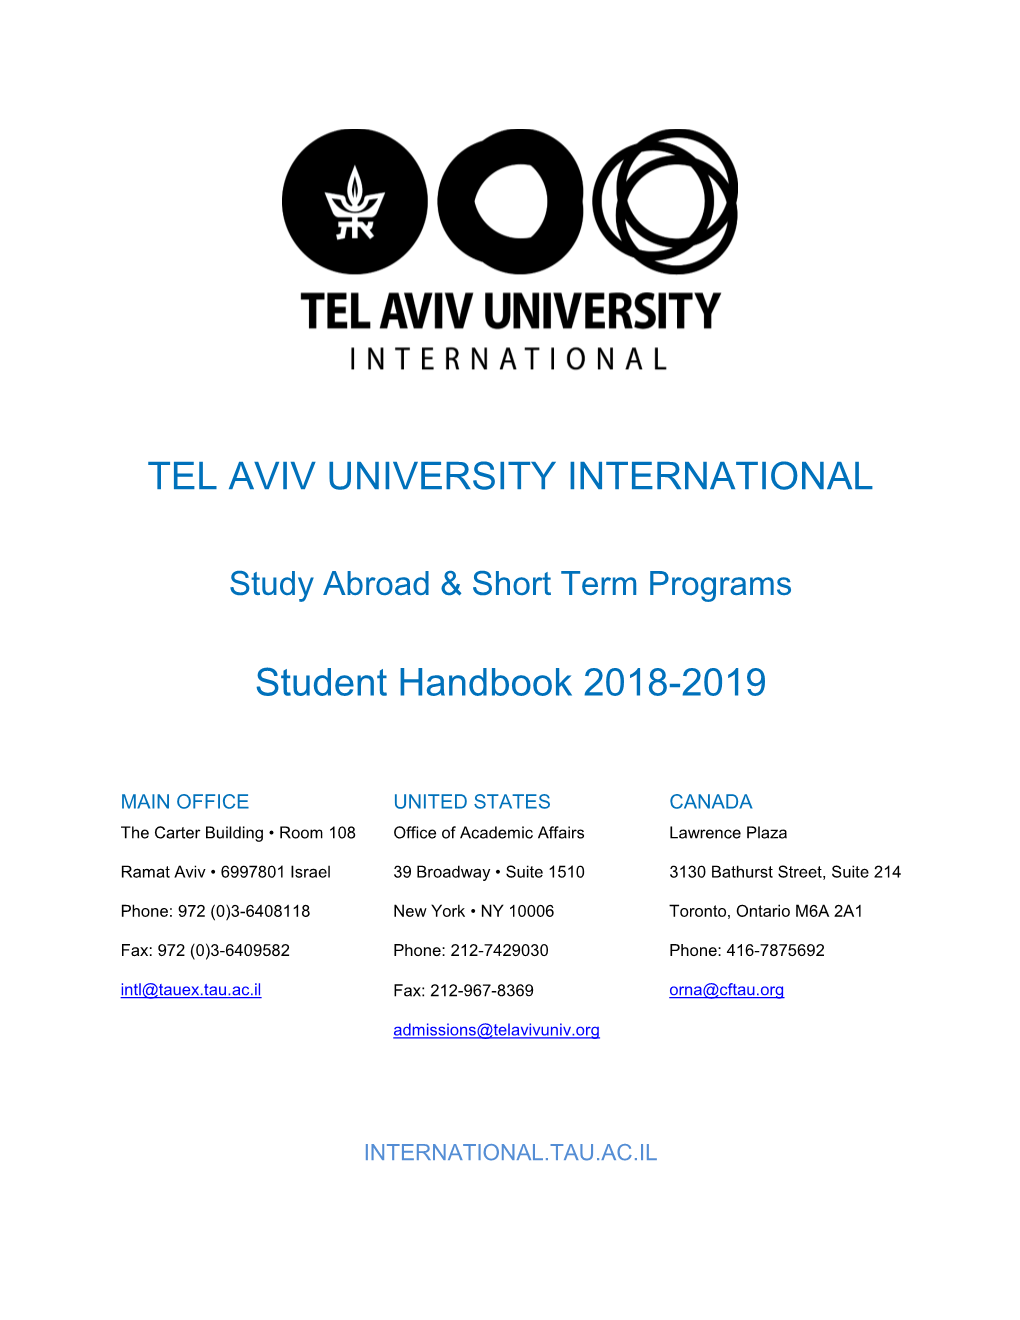 TEL AVIV UNIVERSITY INTERNATIONAL Student